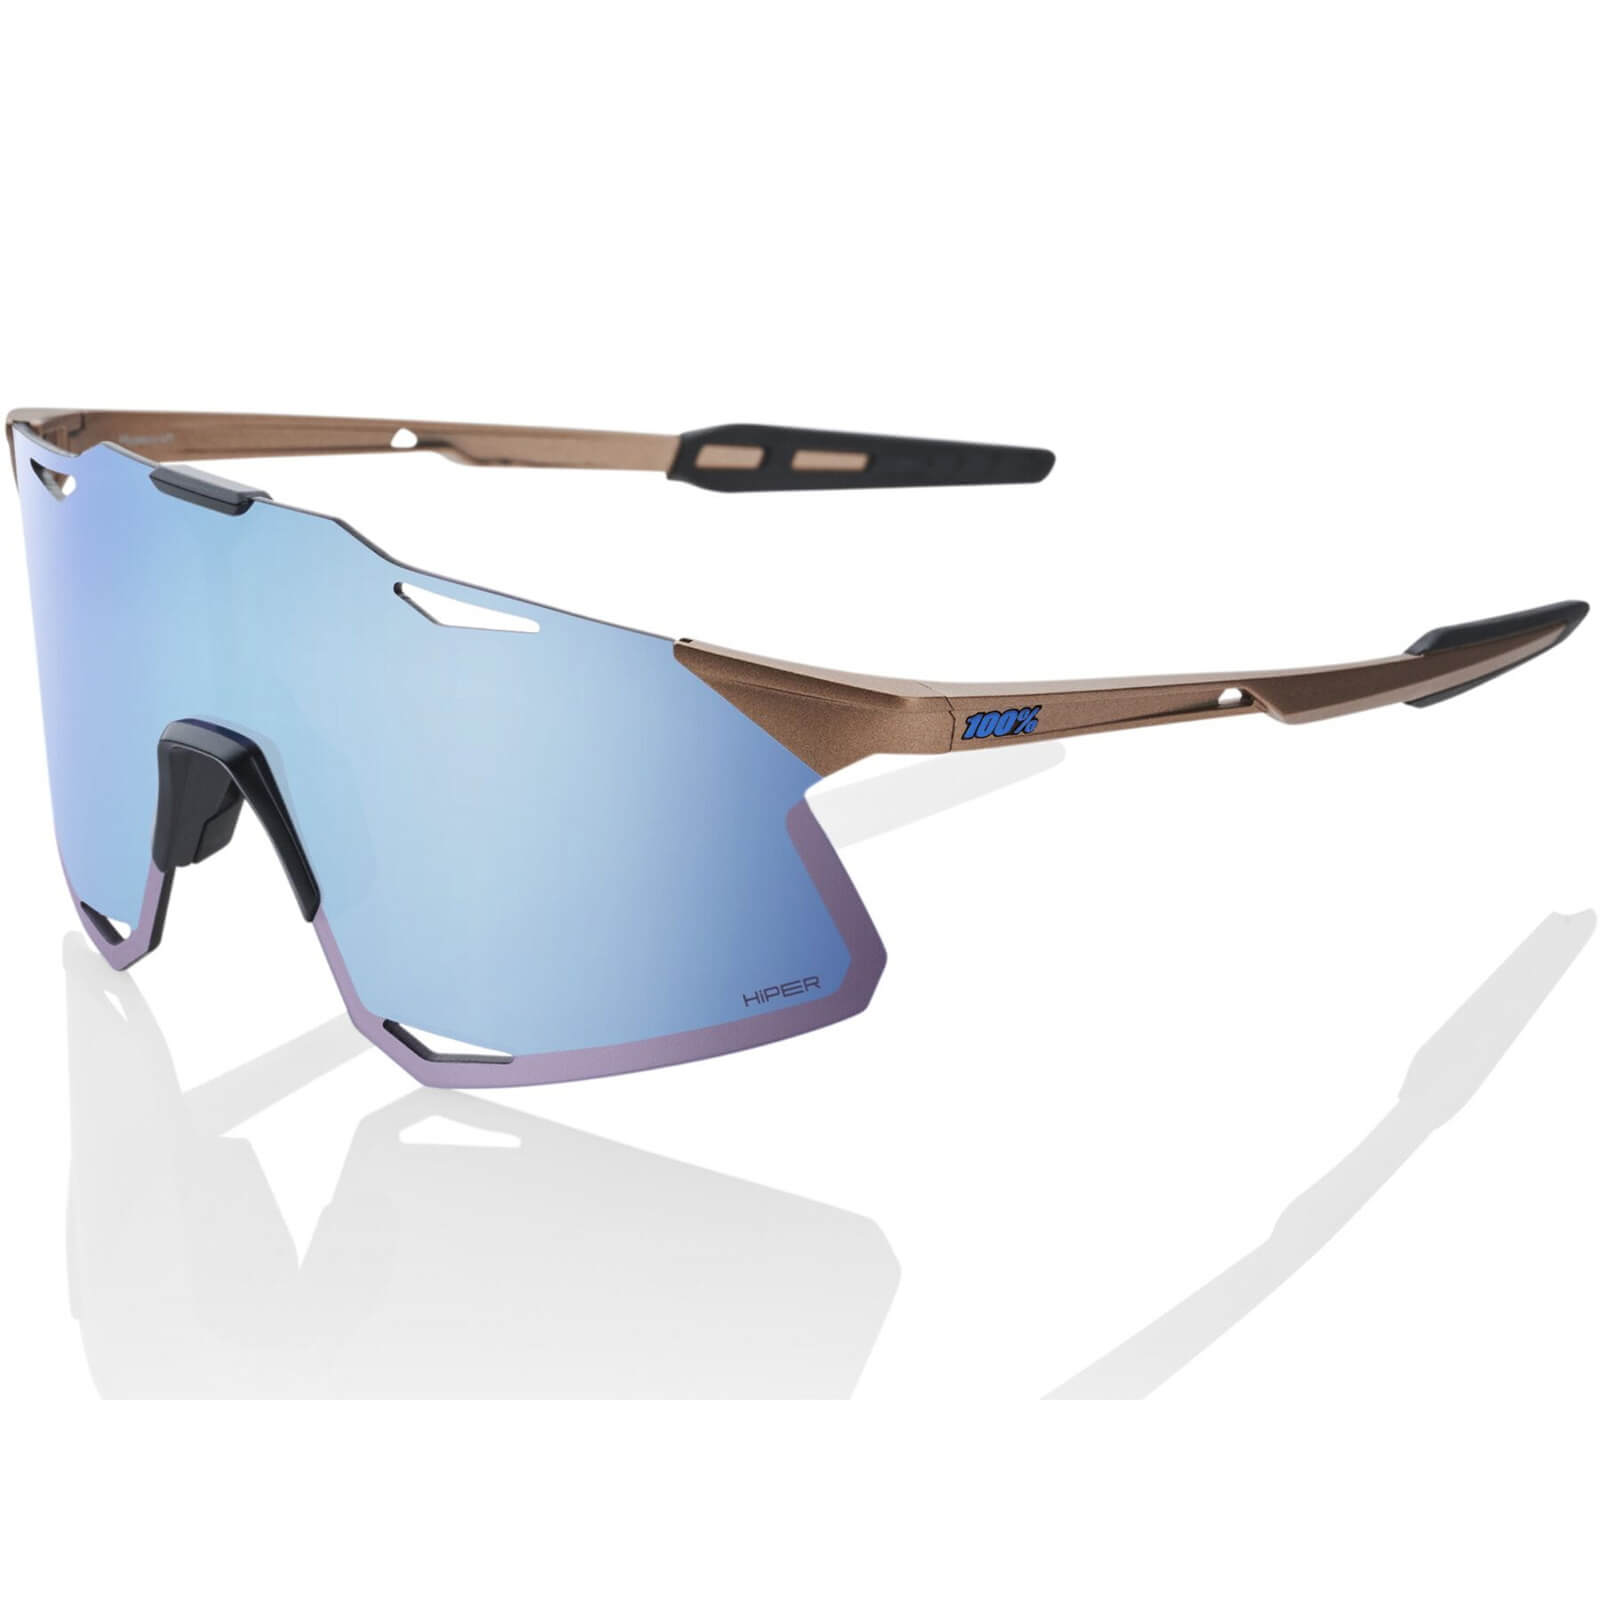 100% Hypercraft Sunglasses with HiPER Blue Multilayer Mirror Lens - Matt Copper Chromium